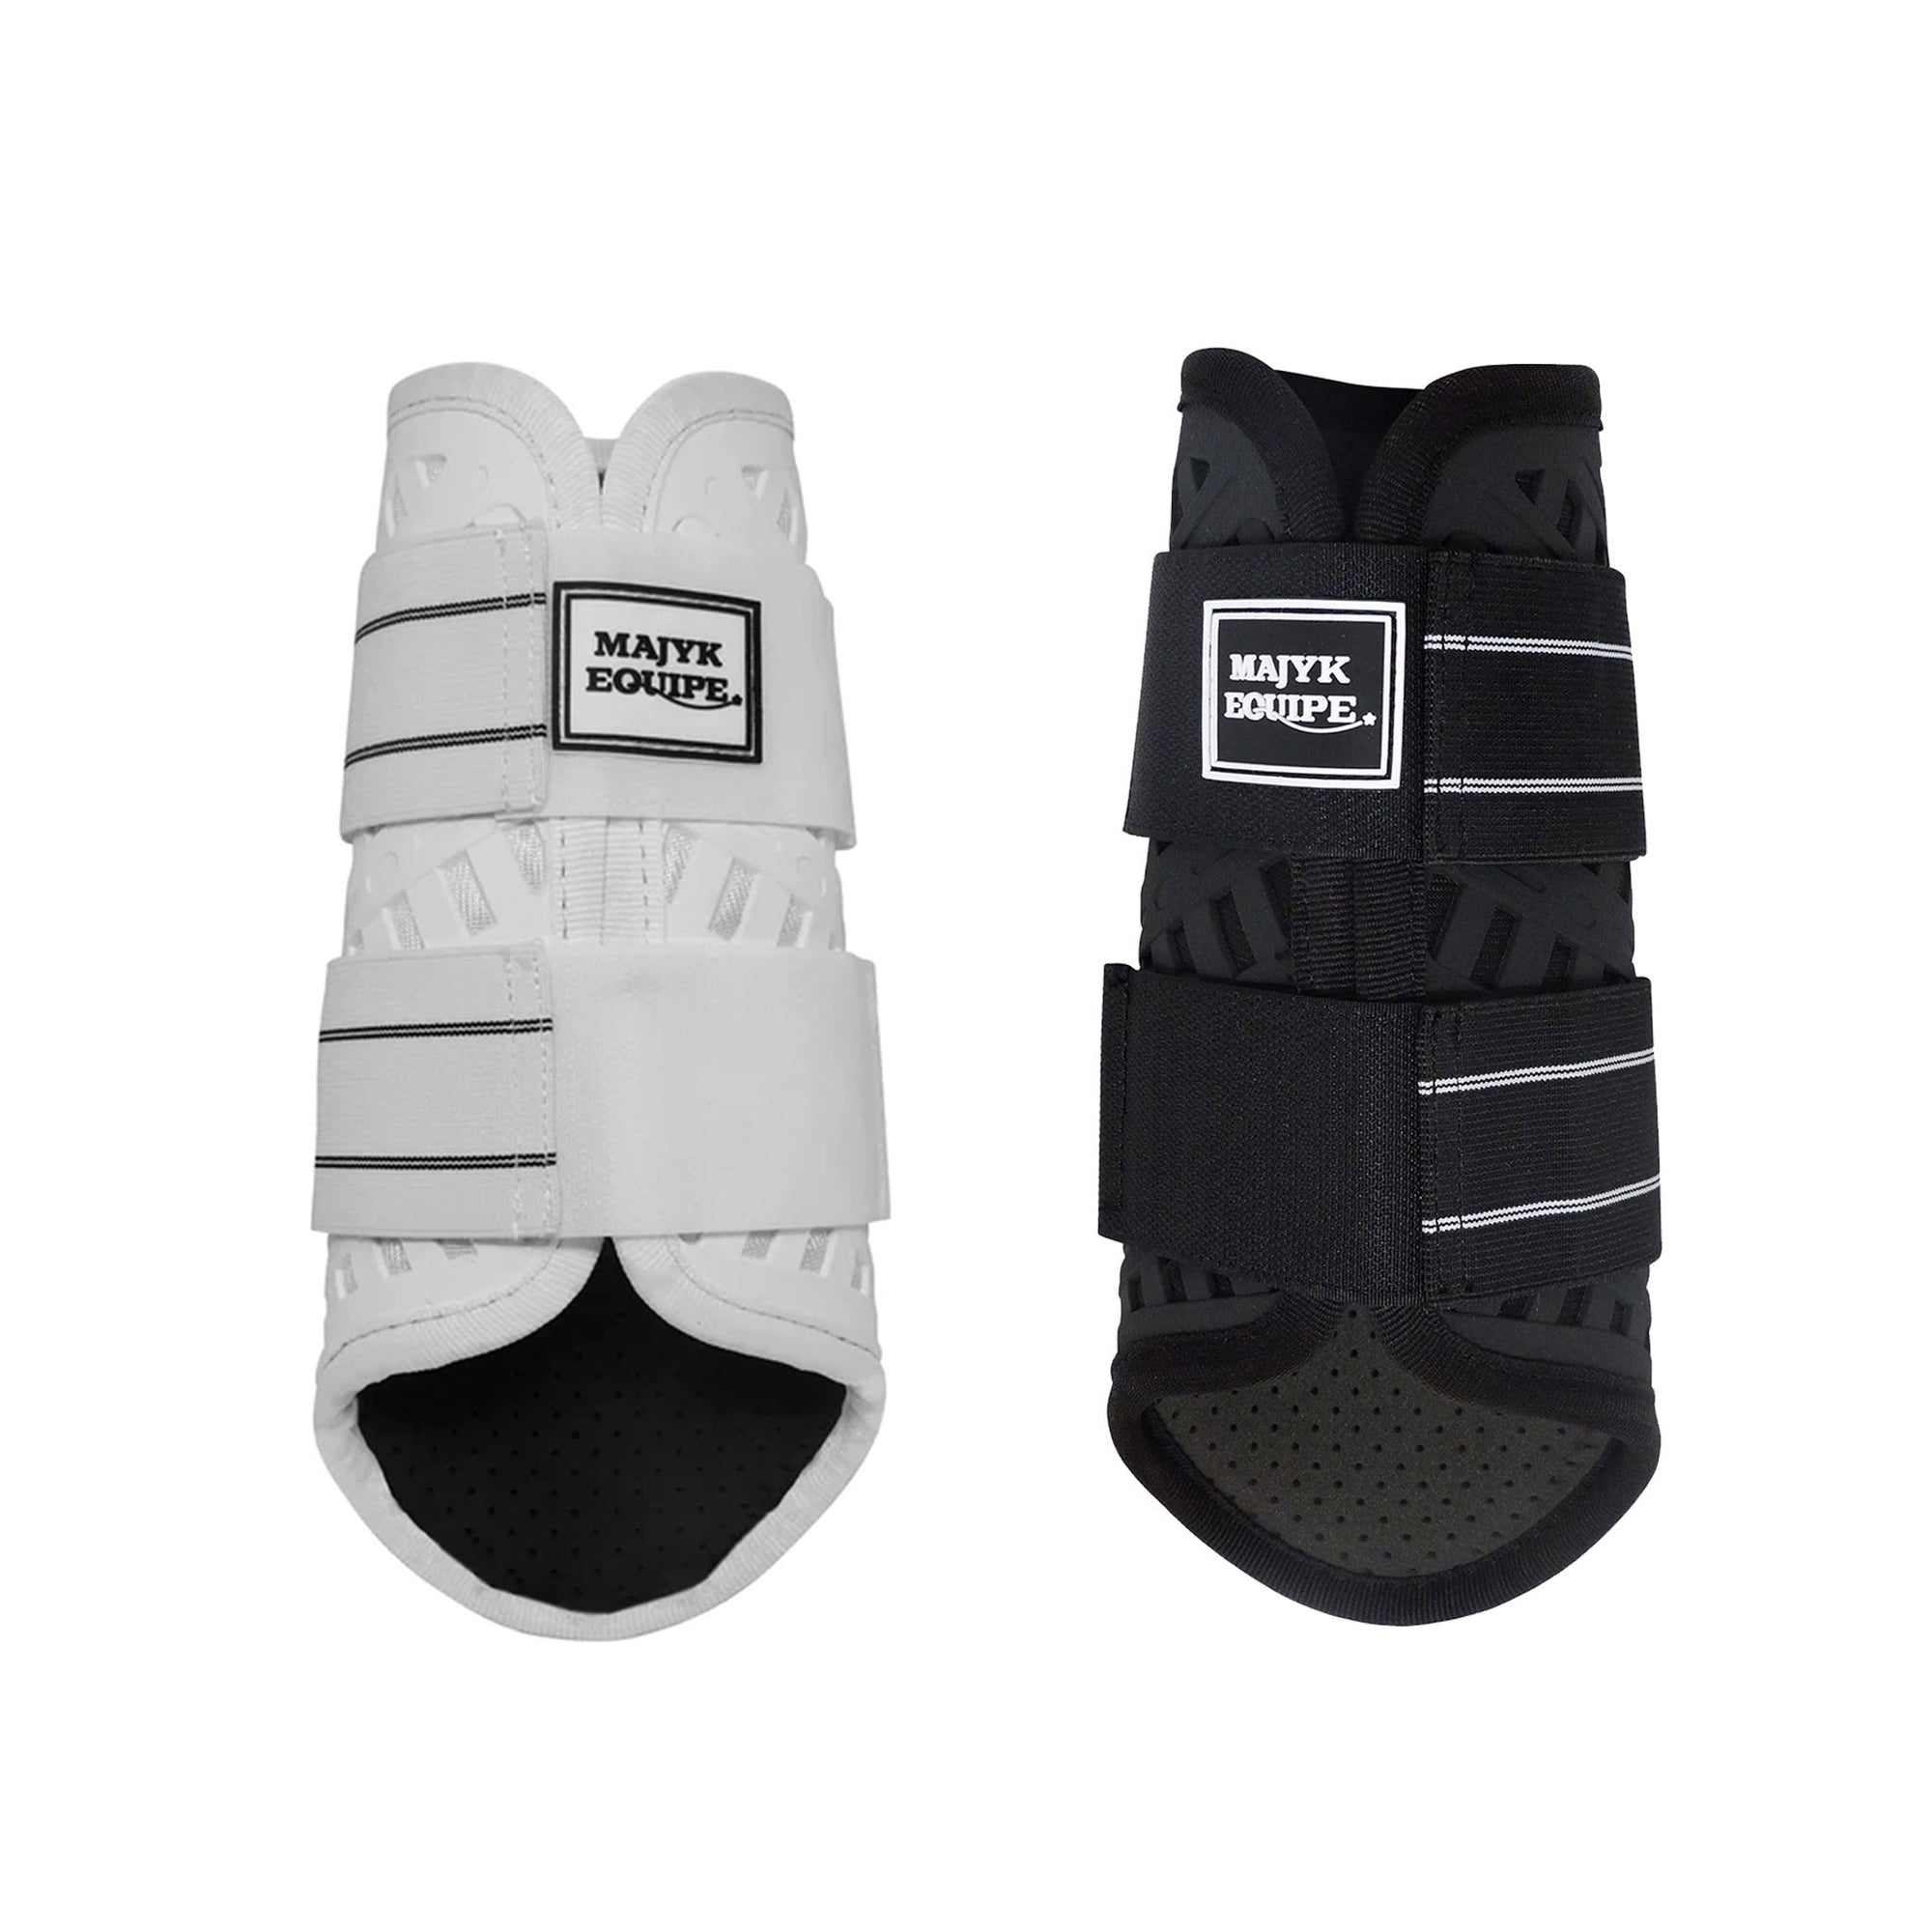 Majyk-Equipe-sport-dressage-boots